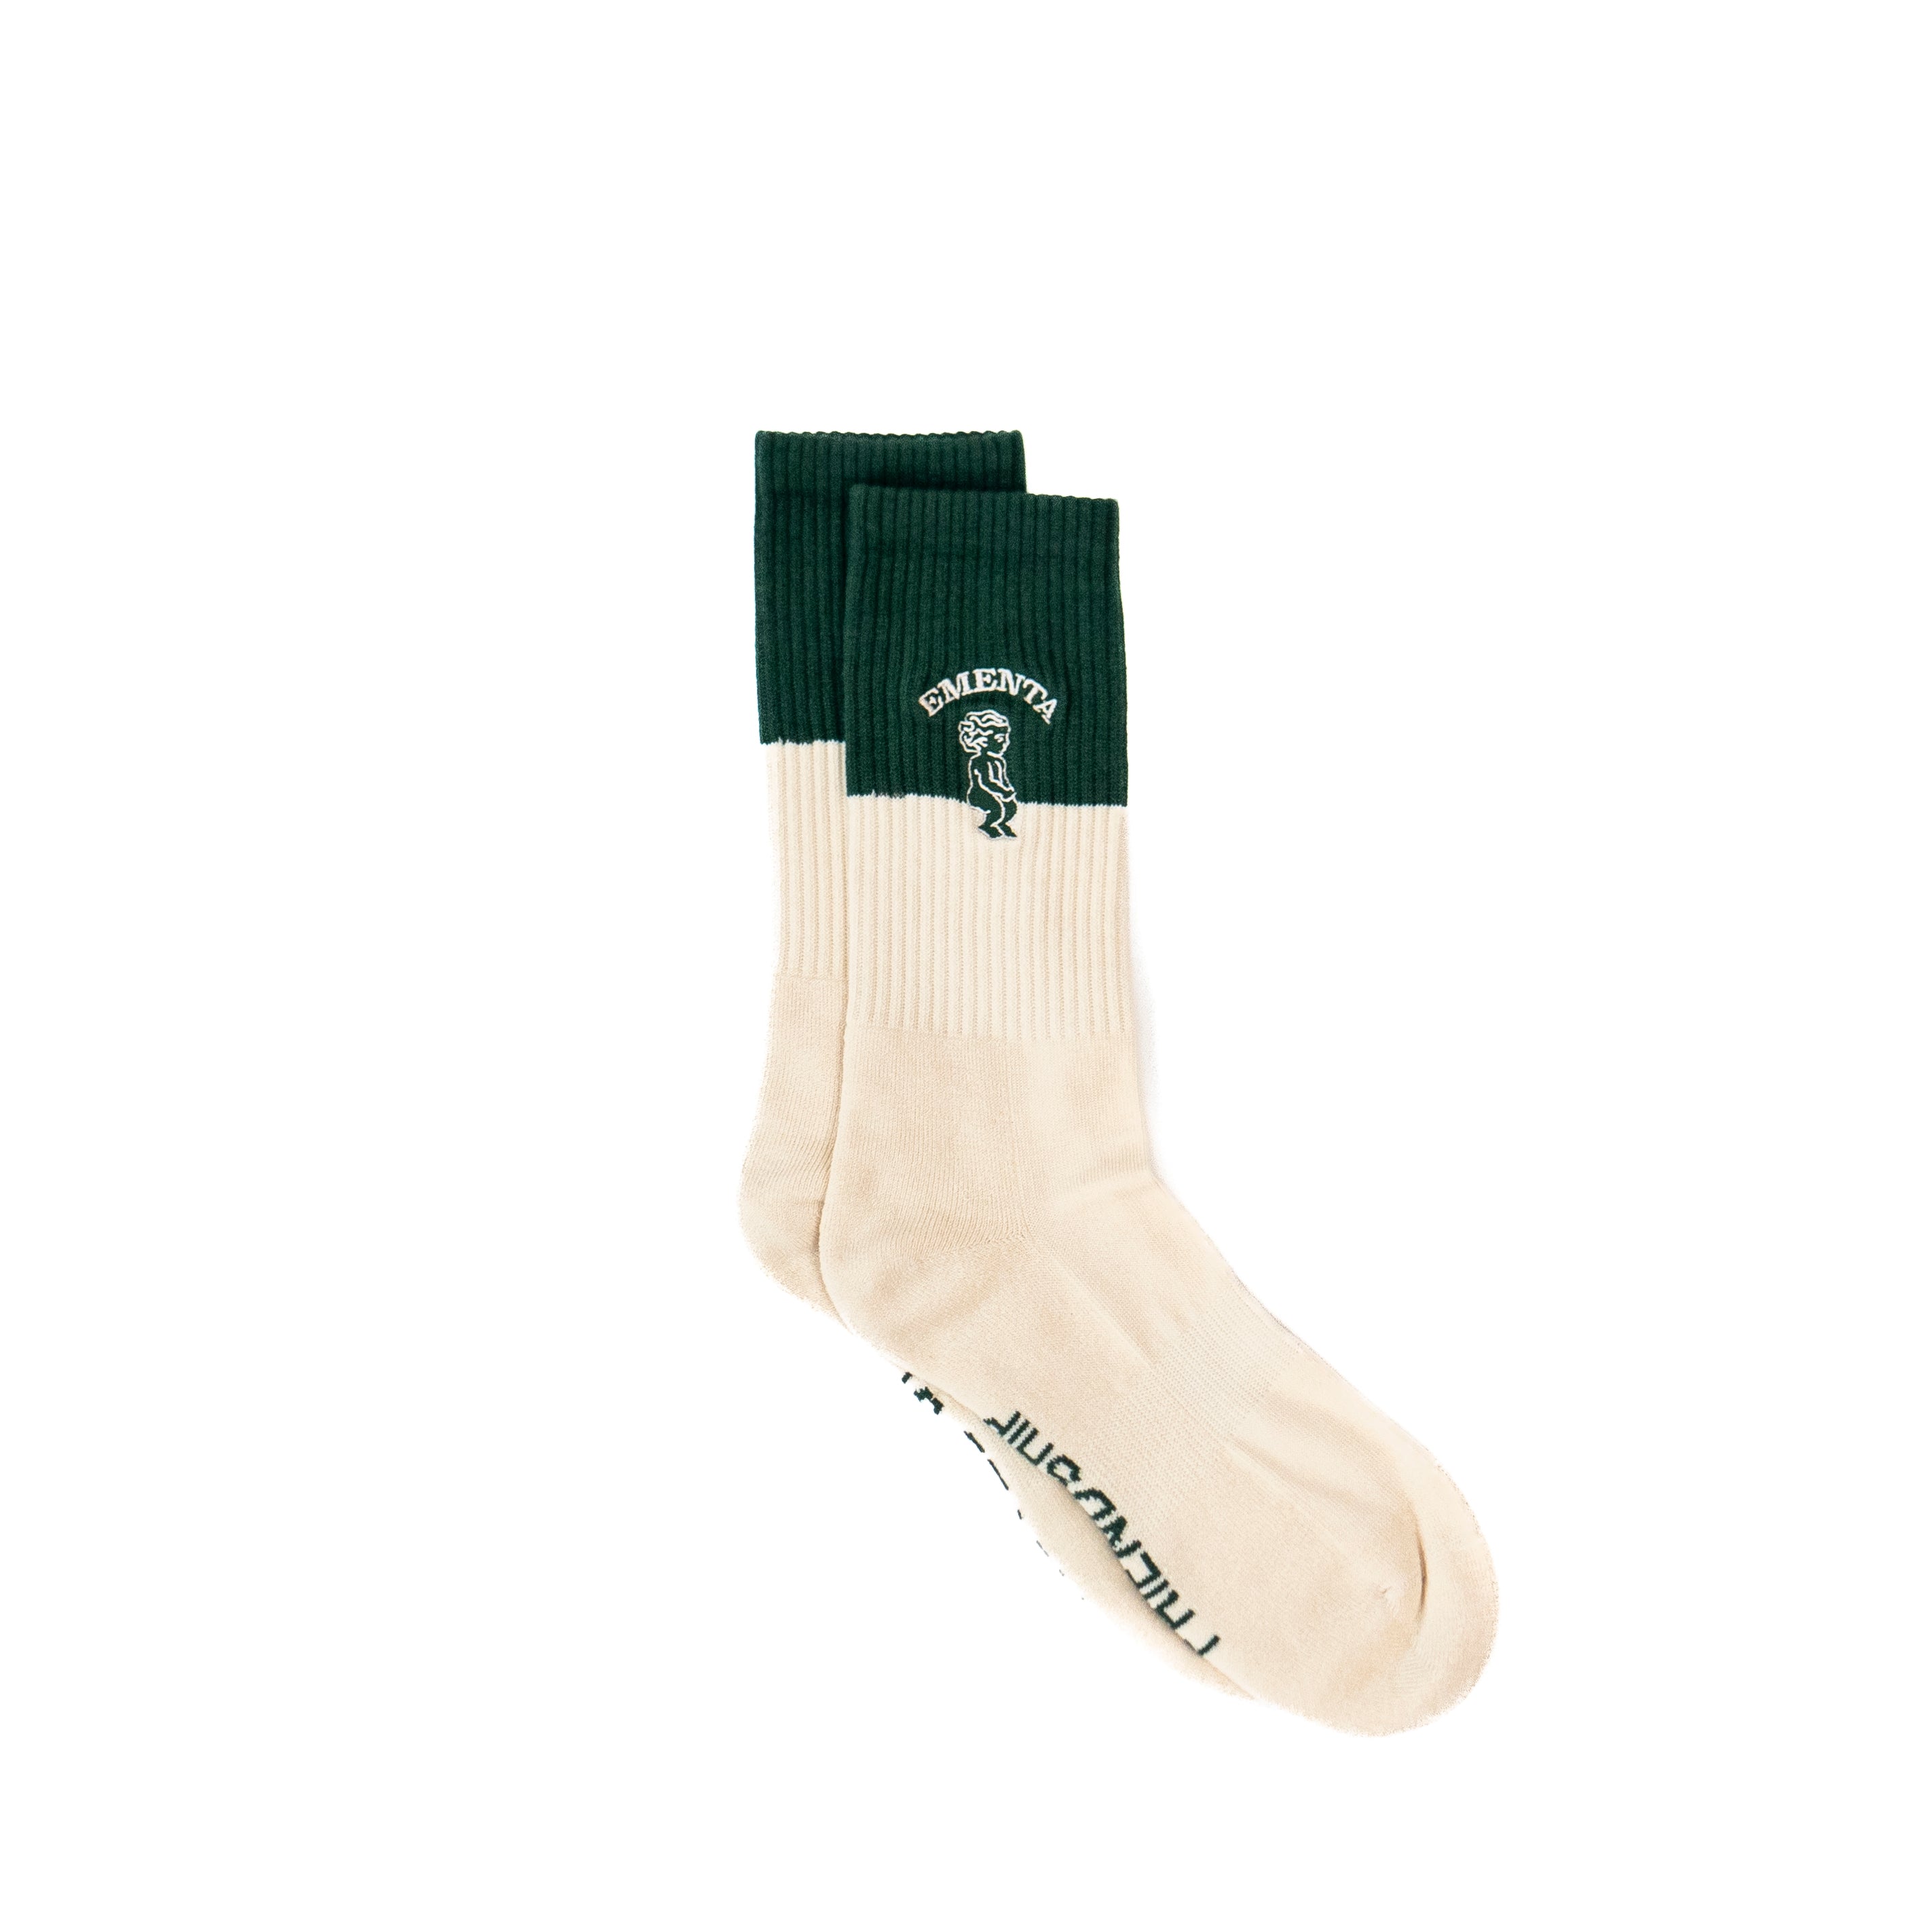 2 Tone Baby Socks Green/Off White